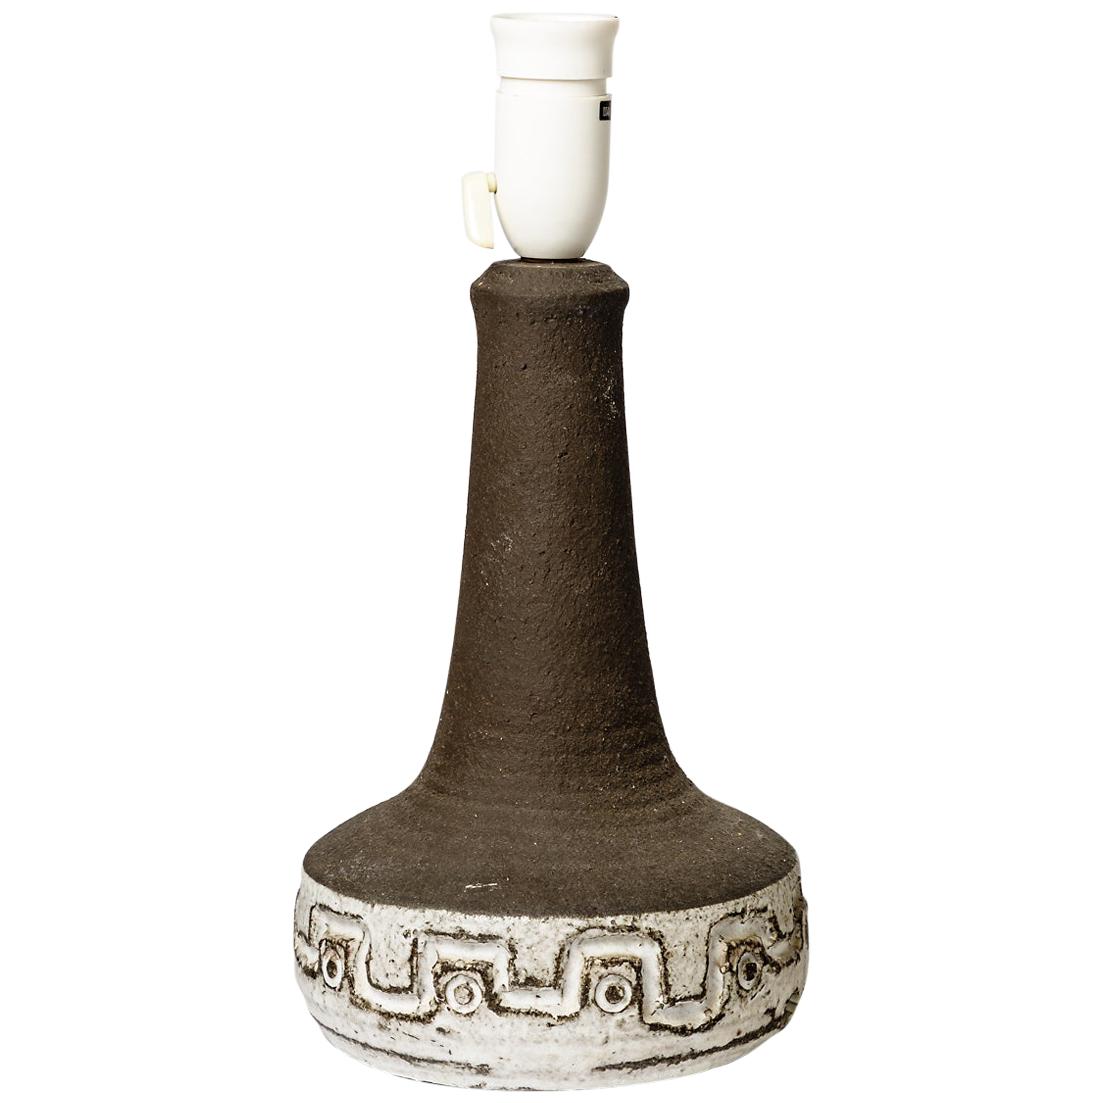 Black and White Stoneware Ceramic Table Lamp circa 1970 French Design For Sale